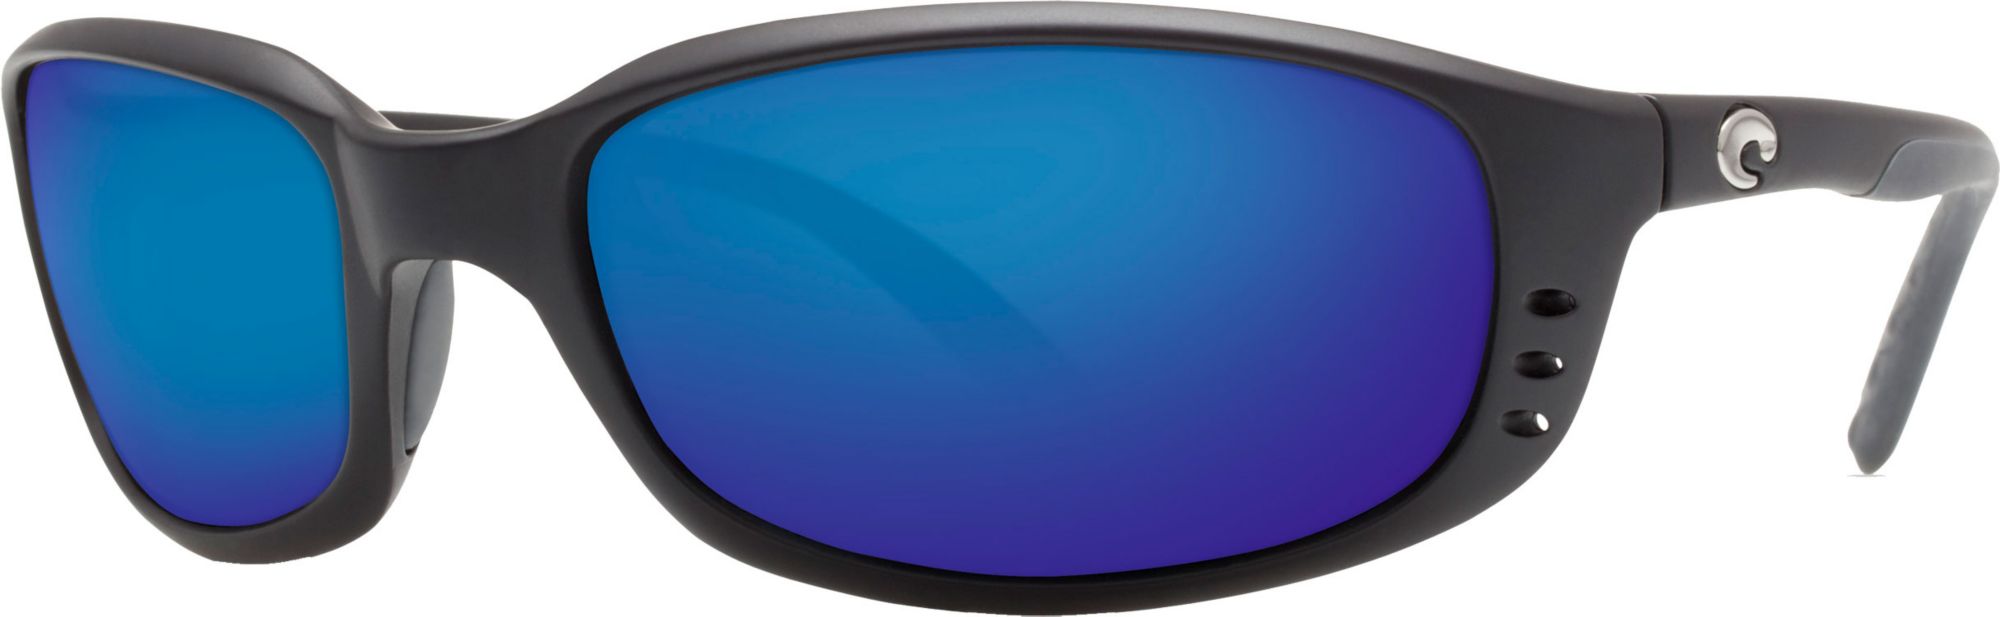 Photos - Sunglasses Costa Del Mar Brine 580G Polarized , Men's, Black/Blue Mirror 15 